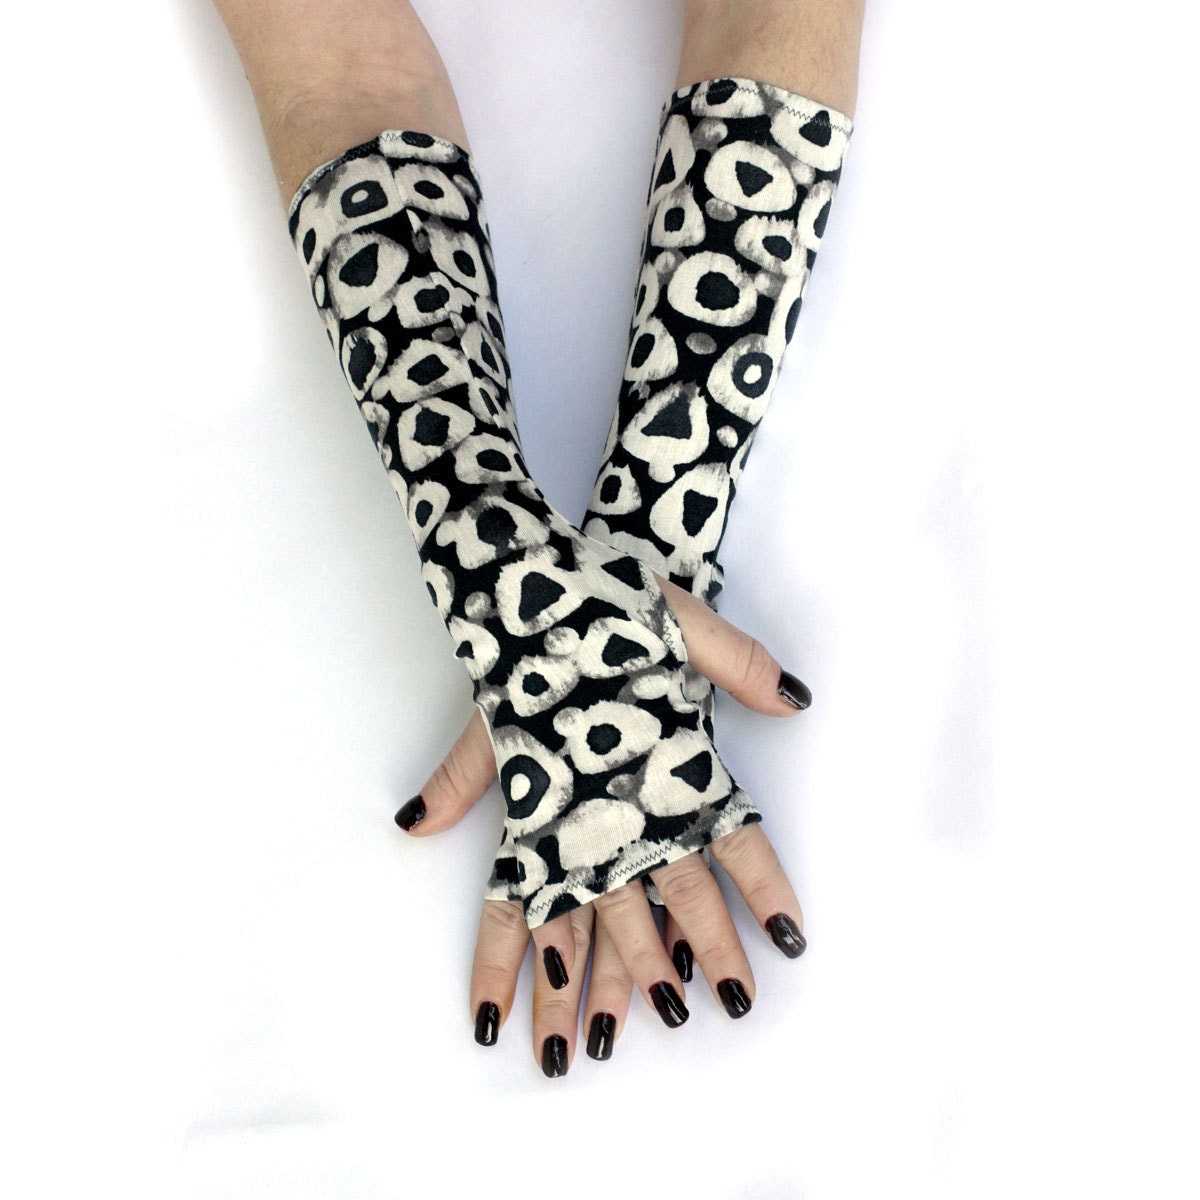 Black and White Rings fingerless gloves, arm warmers, mittens - Steampunk Noir Gothic Yoga Lolita Goth Bohemian Gears Victorian